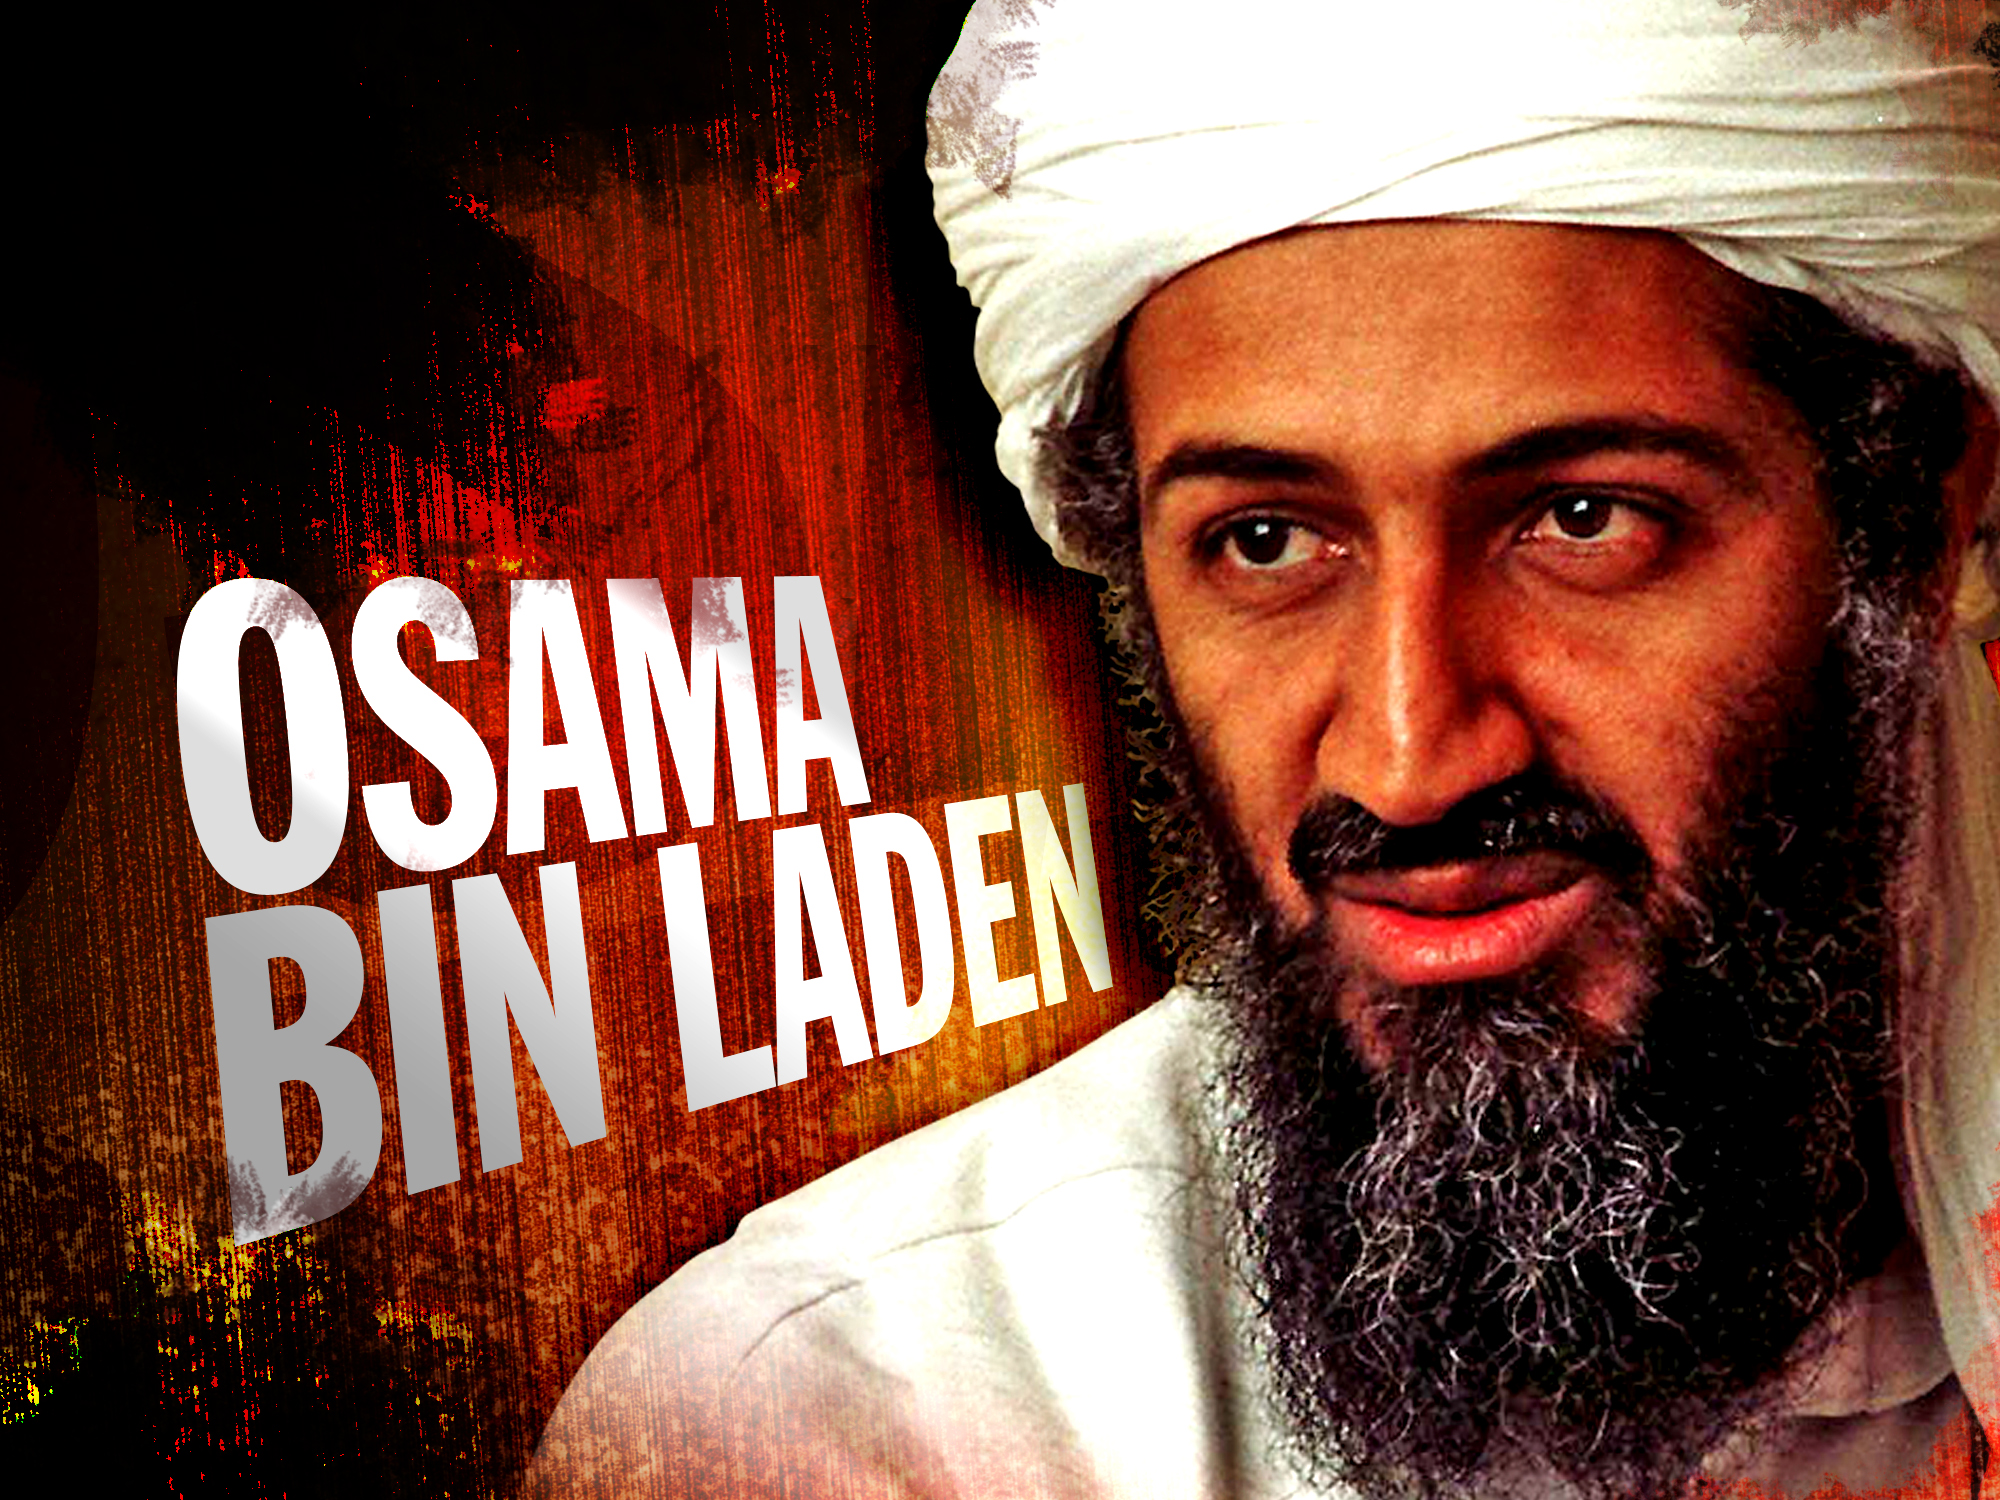 Admiral: 'Destroy' photos of Osama bin Laden's corpse 